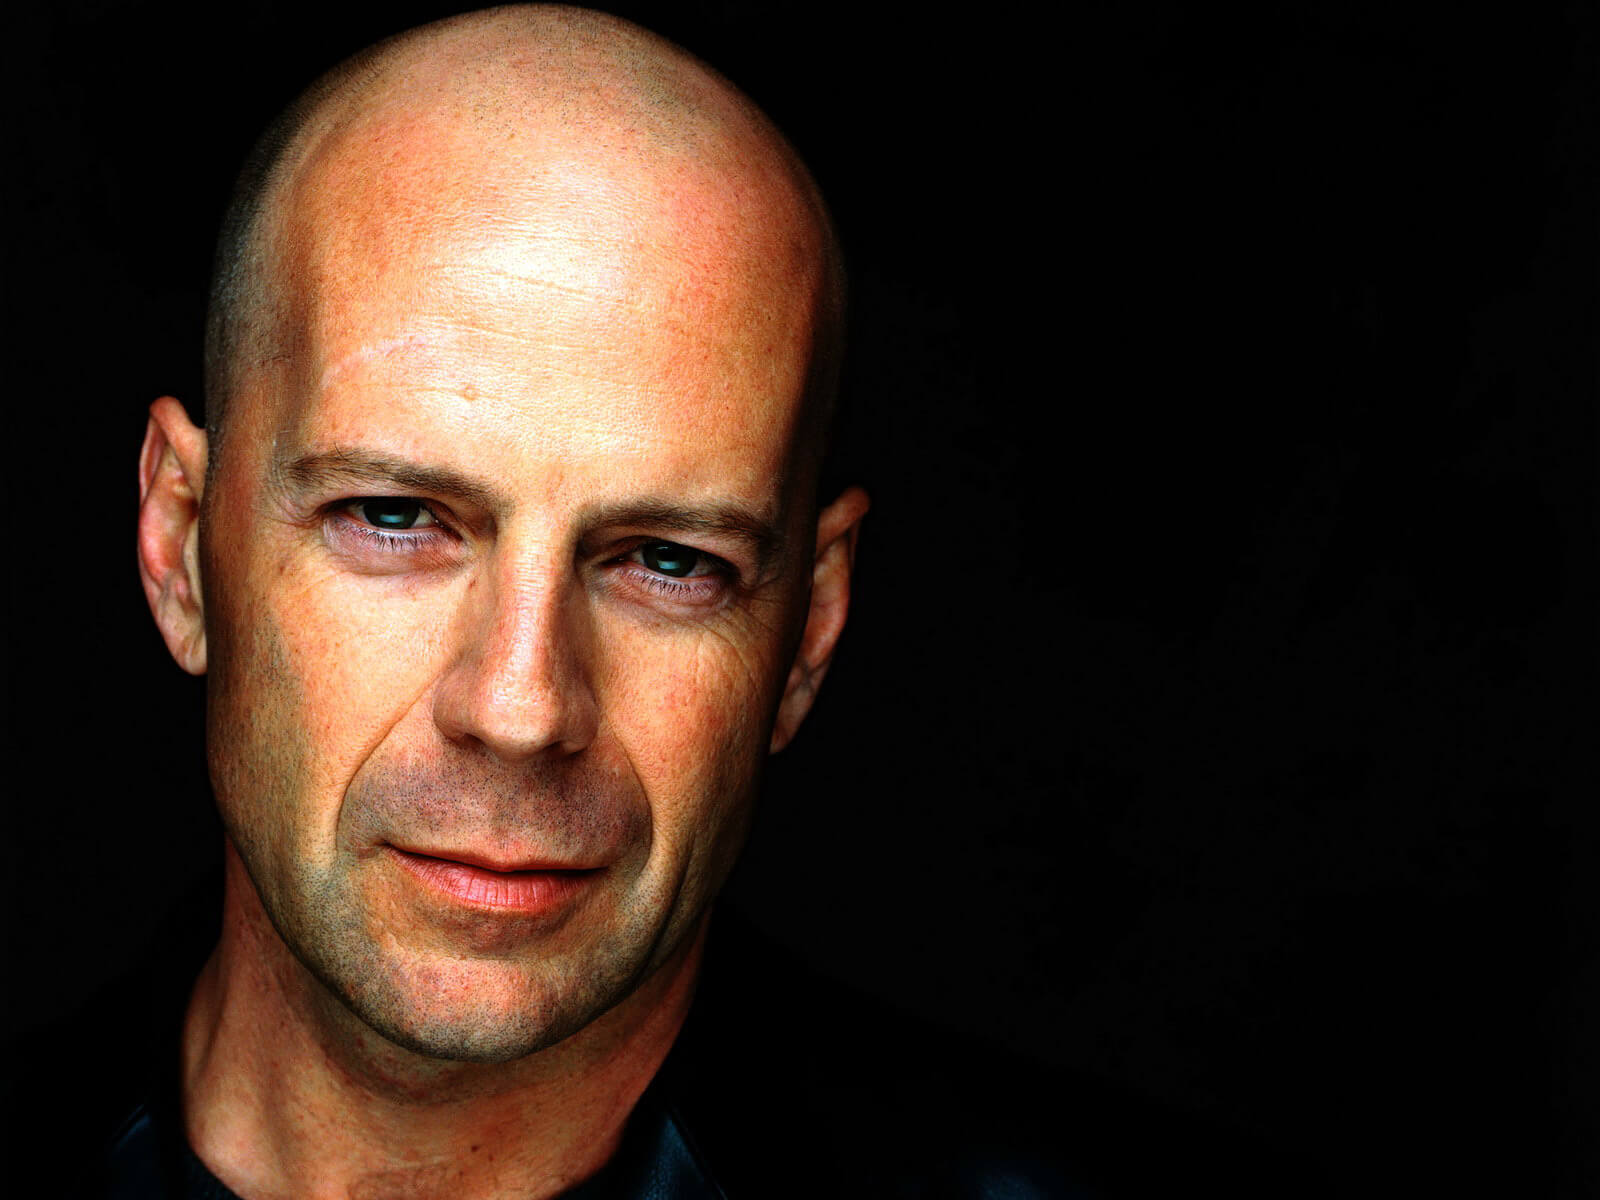 Bruce Willis Biography